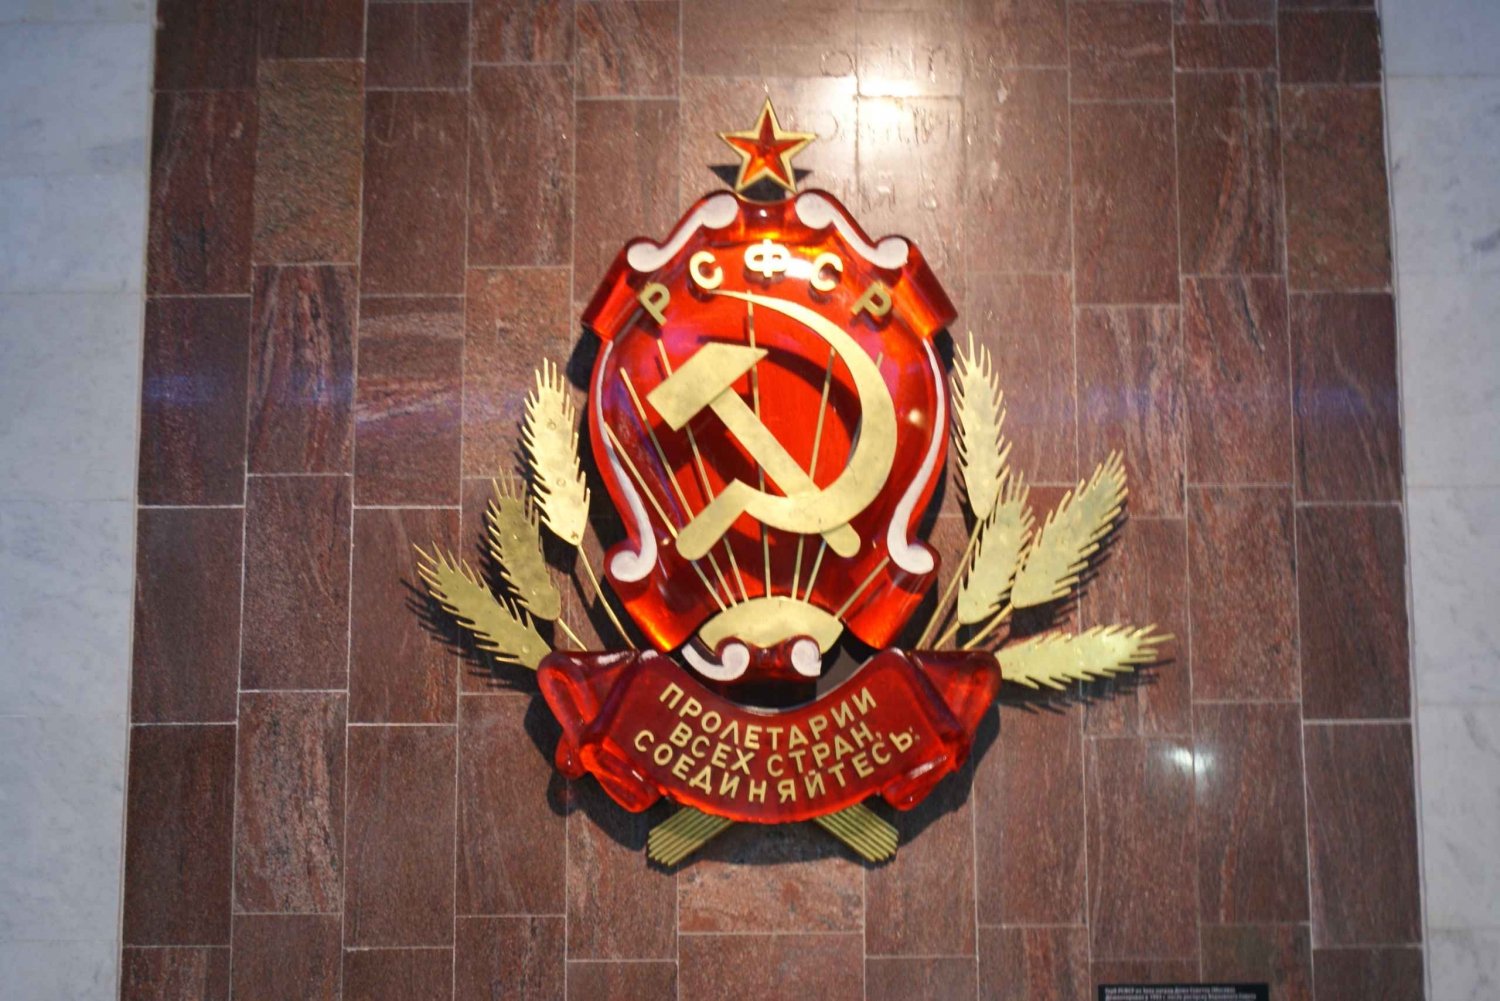 St Petersburg Communist Revolution Tour with Smolny Visit